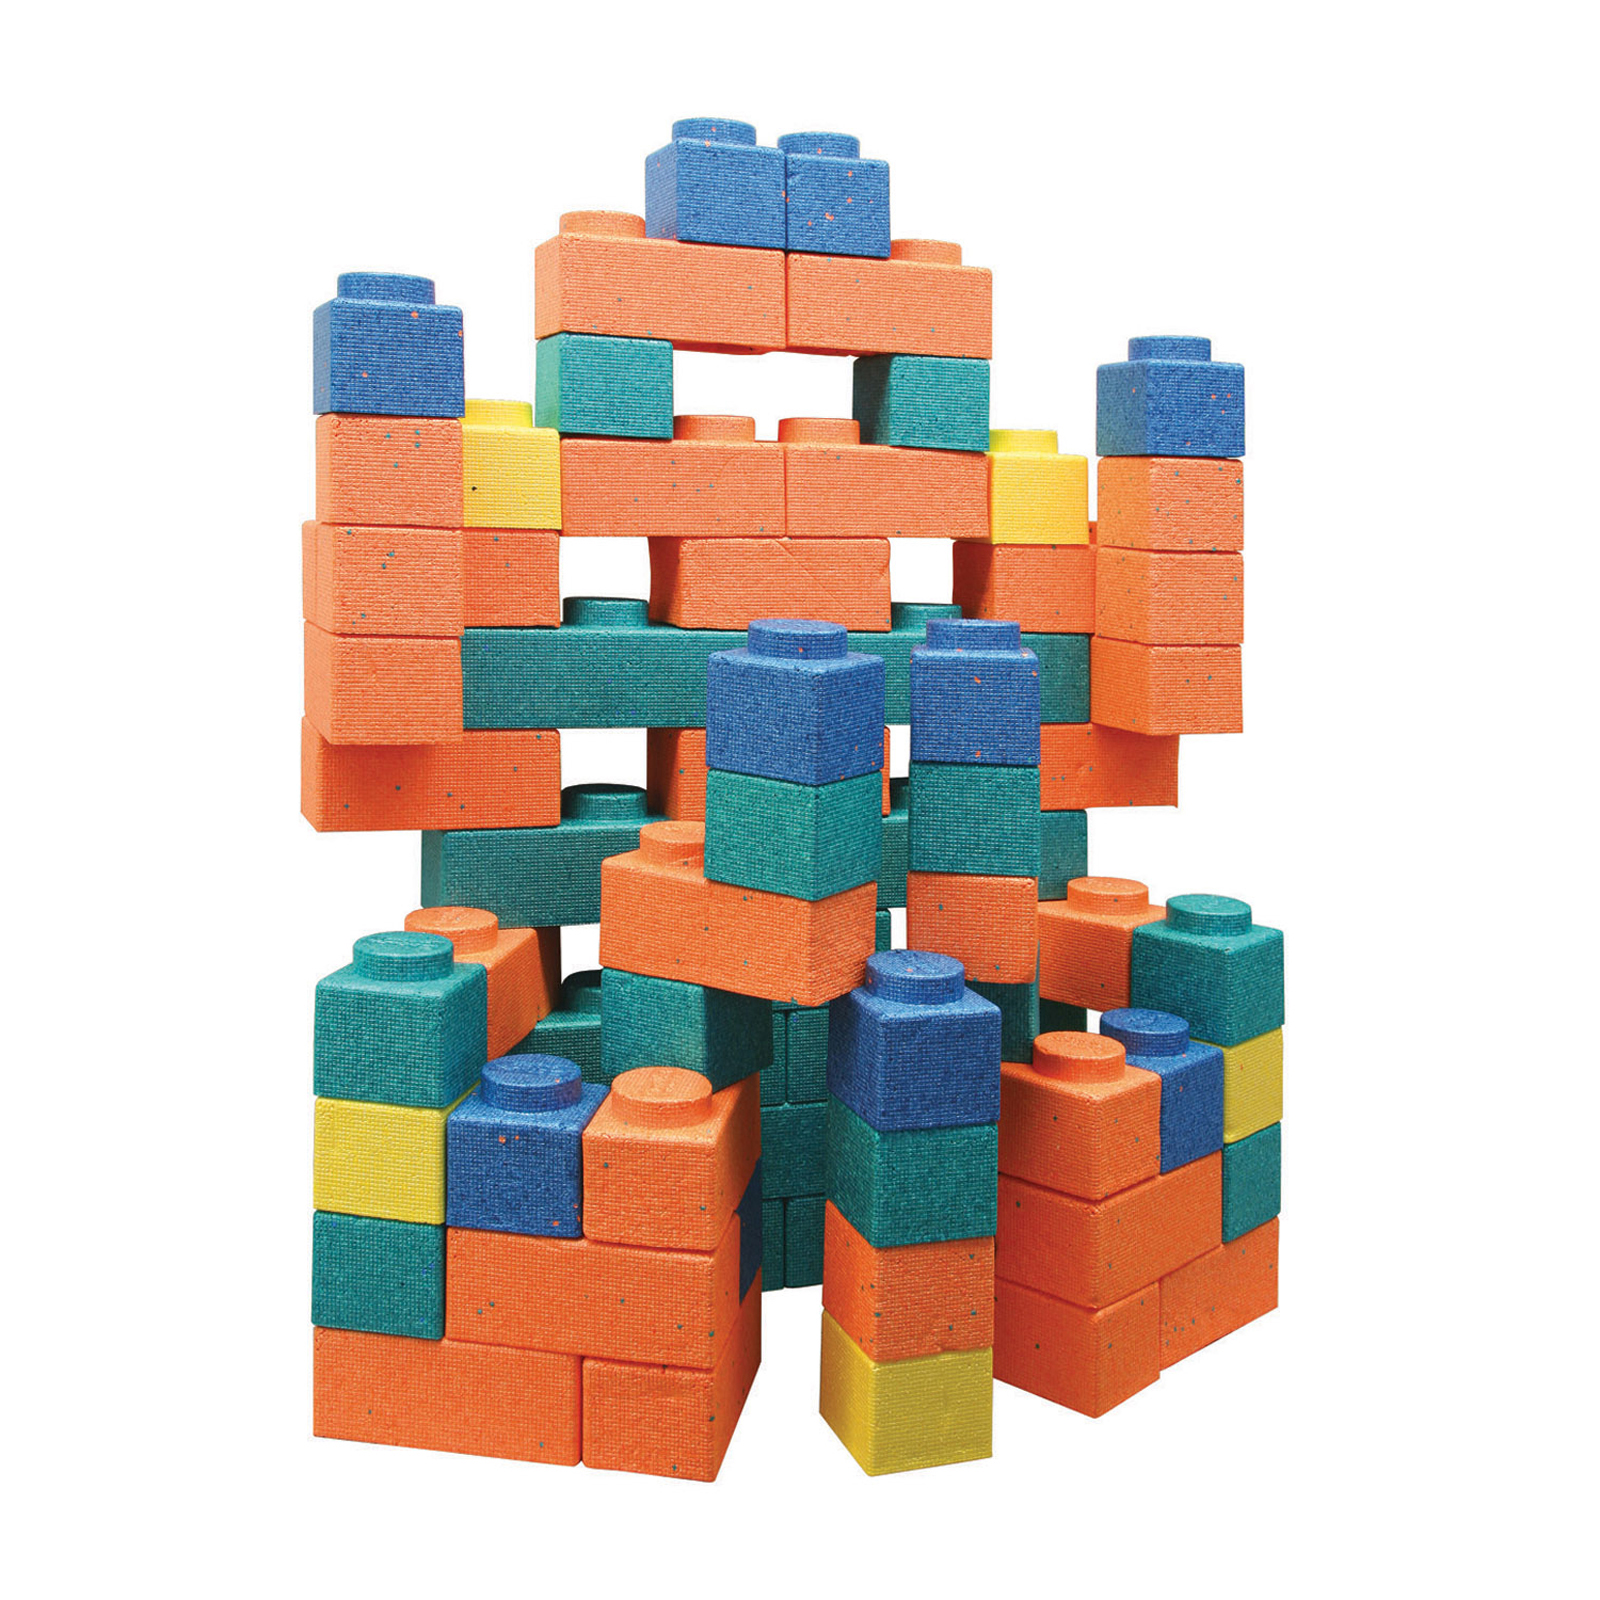 Creativity Street Gorilla Blocks Extra Large Building Blocks, Assorted Colors, 3-1/2" x 3-1/2" to 3-1/2" x 10-3/4", 66 Pieces